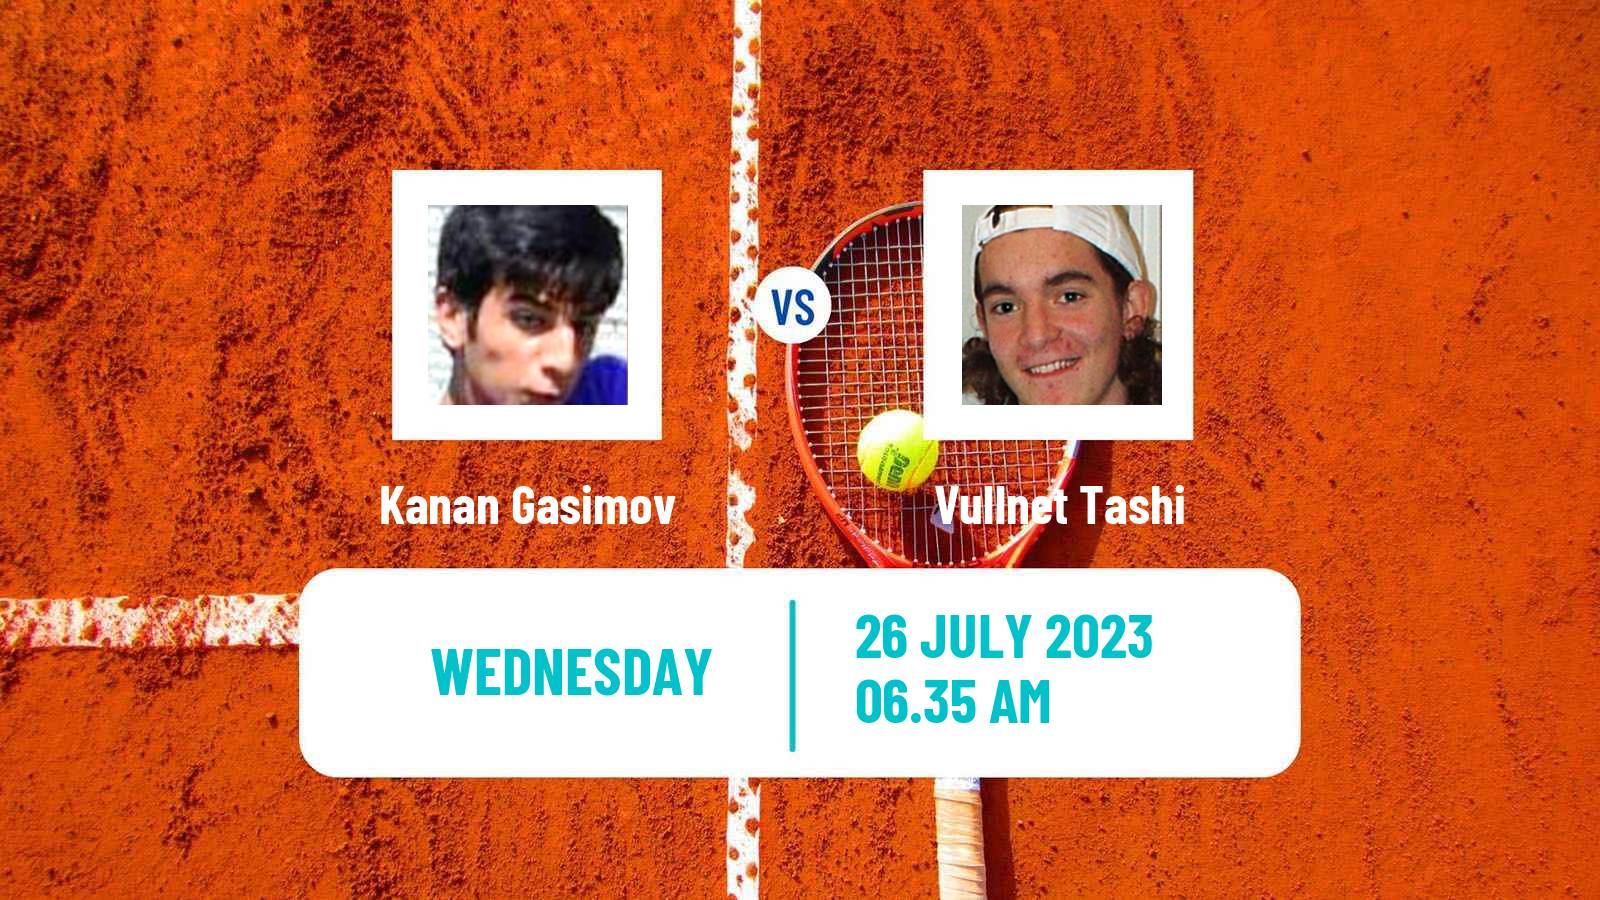 Tennis Davis Cup Group IV Kanan Gasimov - Vullnet Tashi